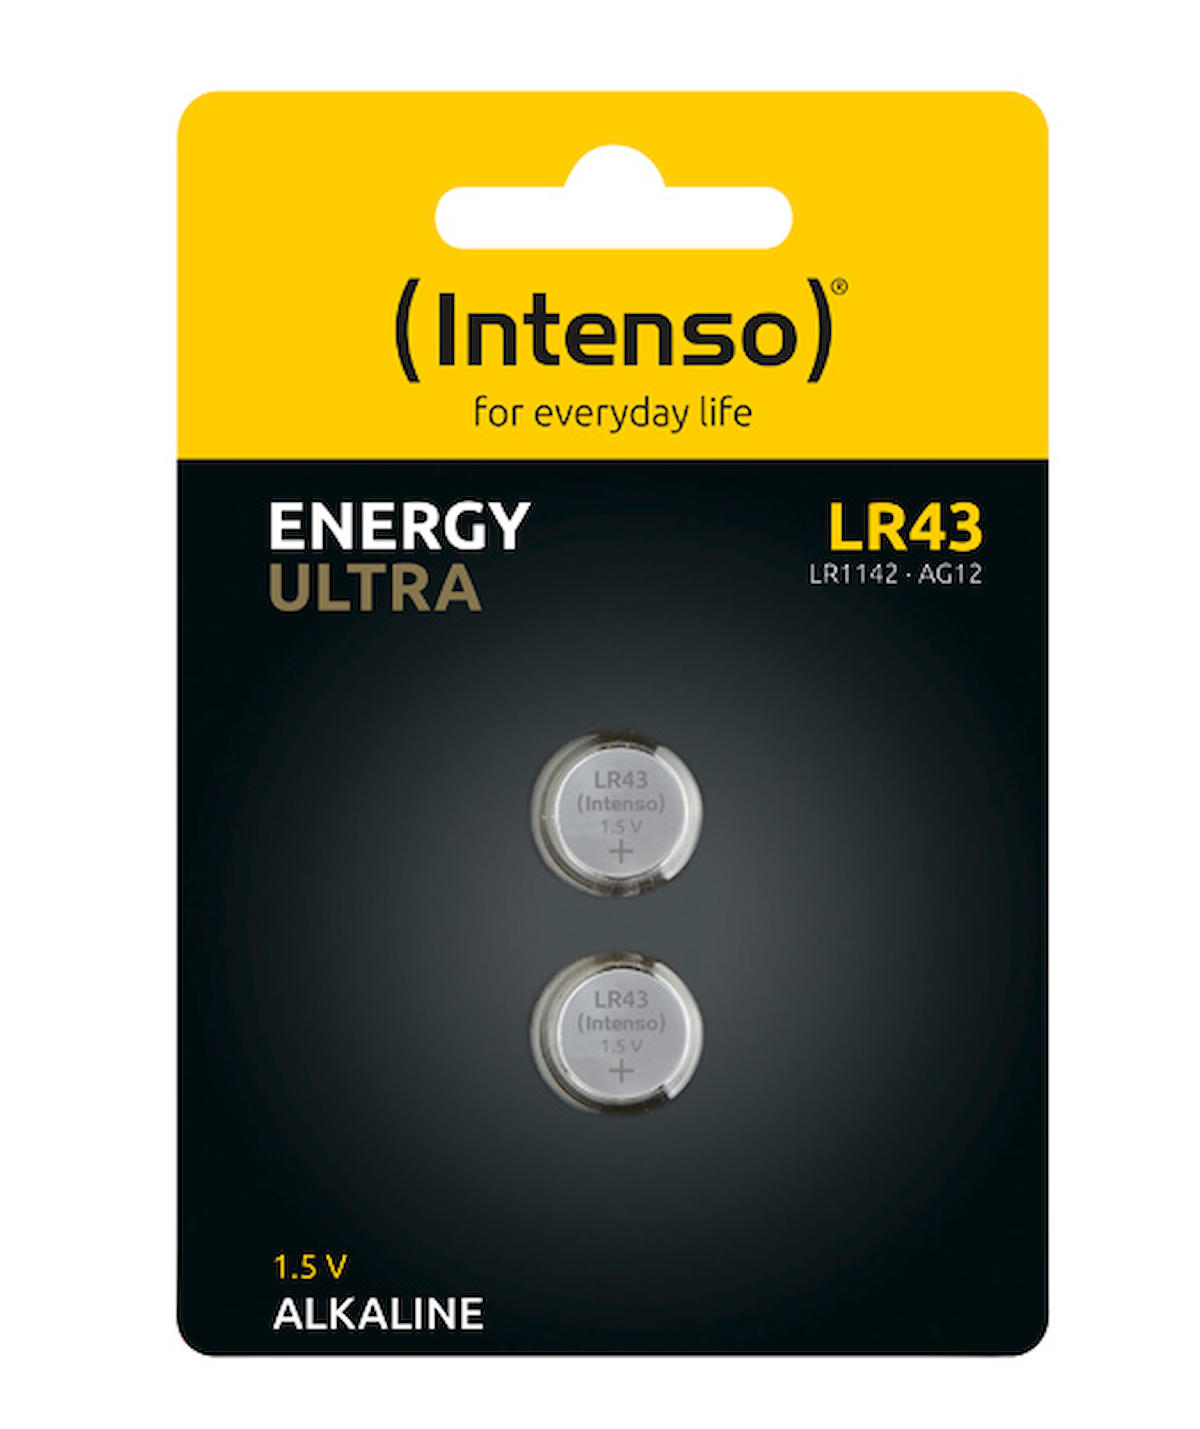 İntenso LR43 1.5 V Alkalin Düğme Pil 2'li